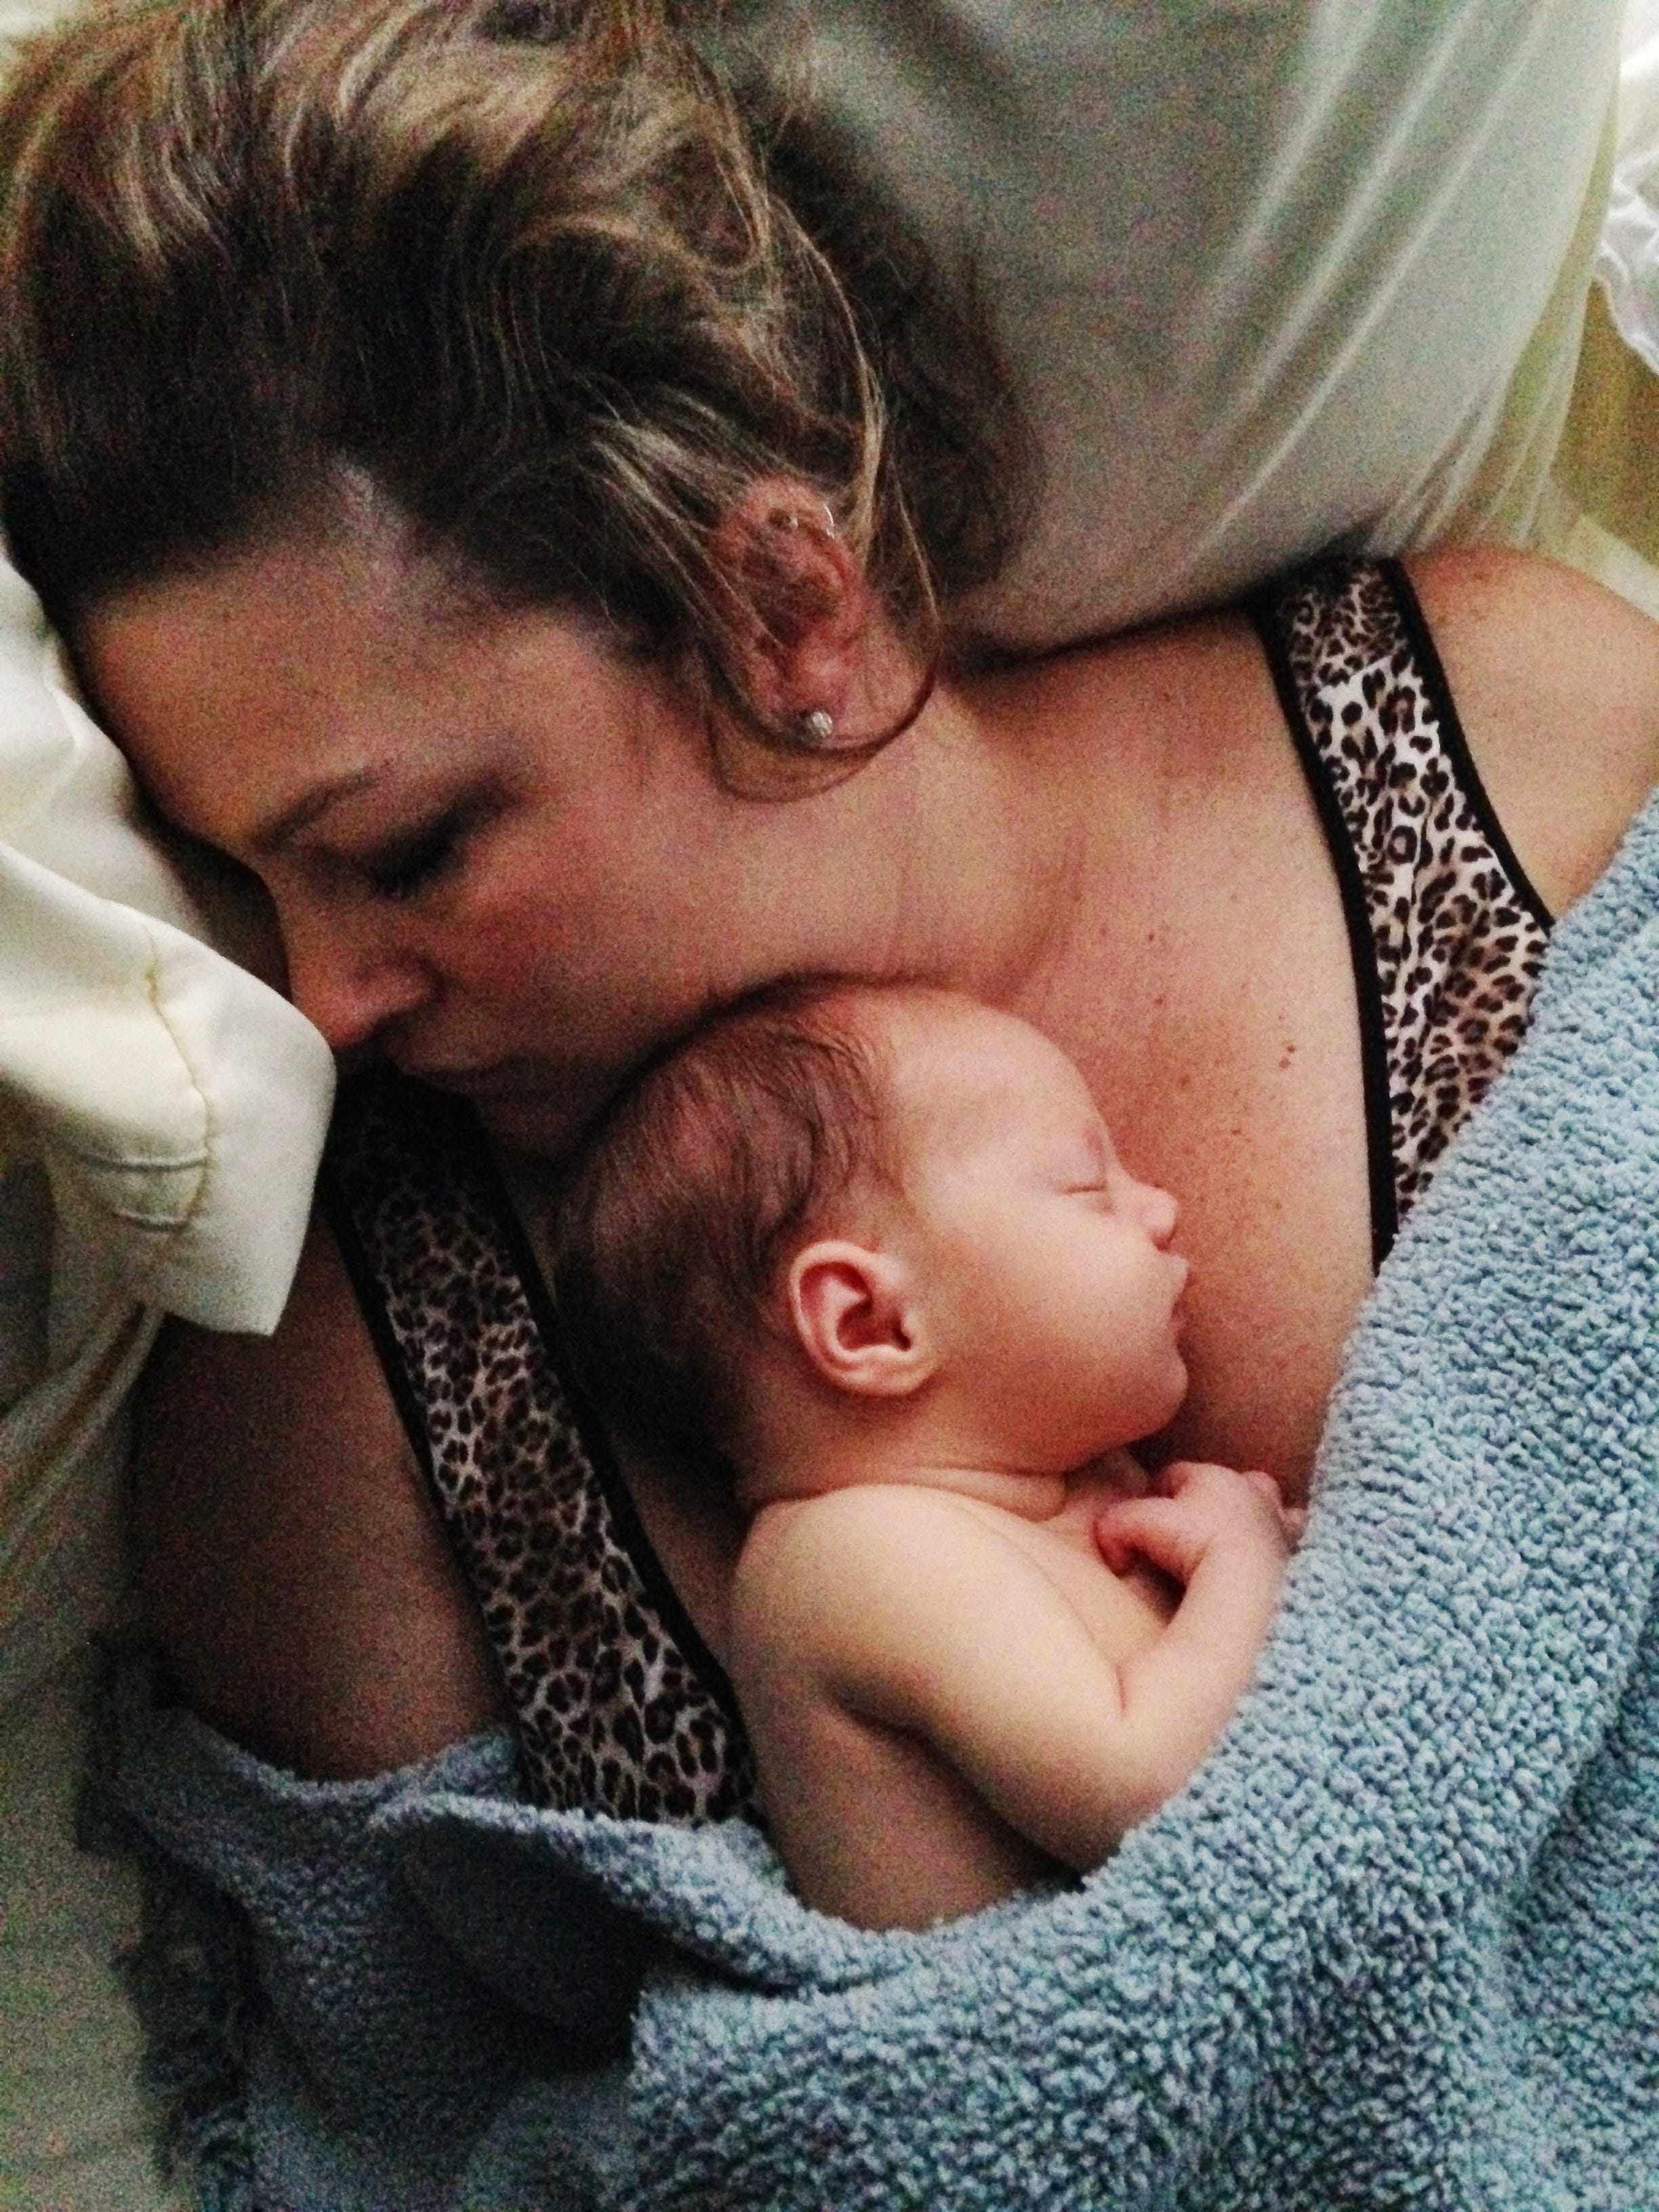 safest way to co sleep with newborn